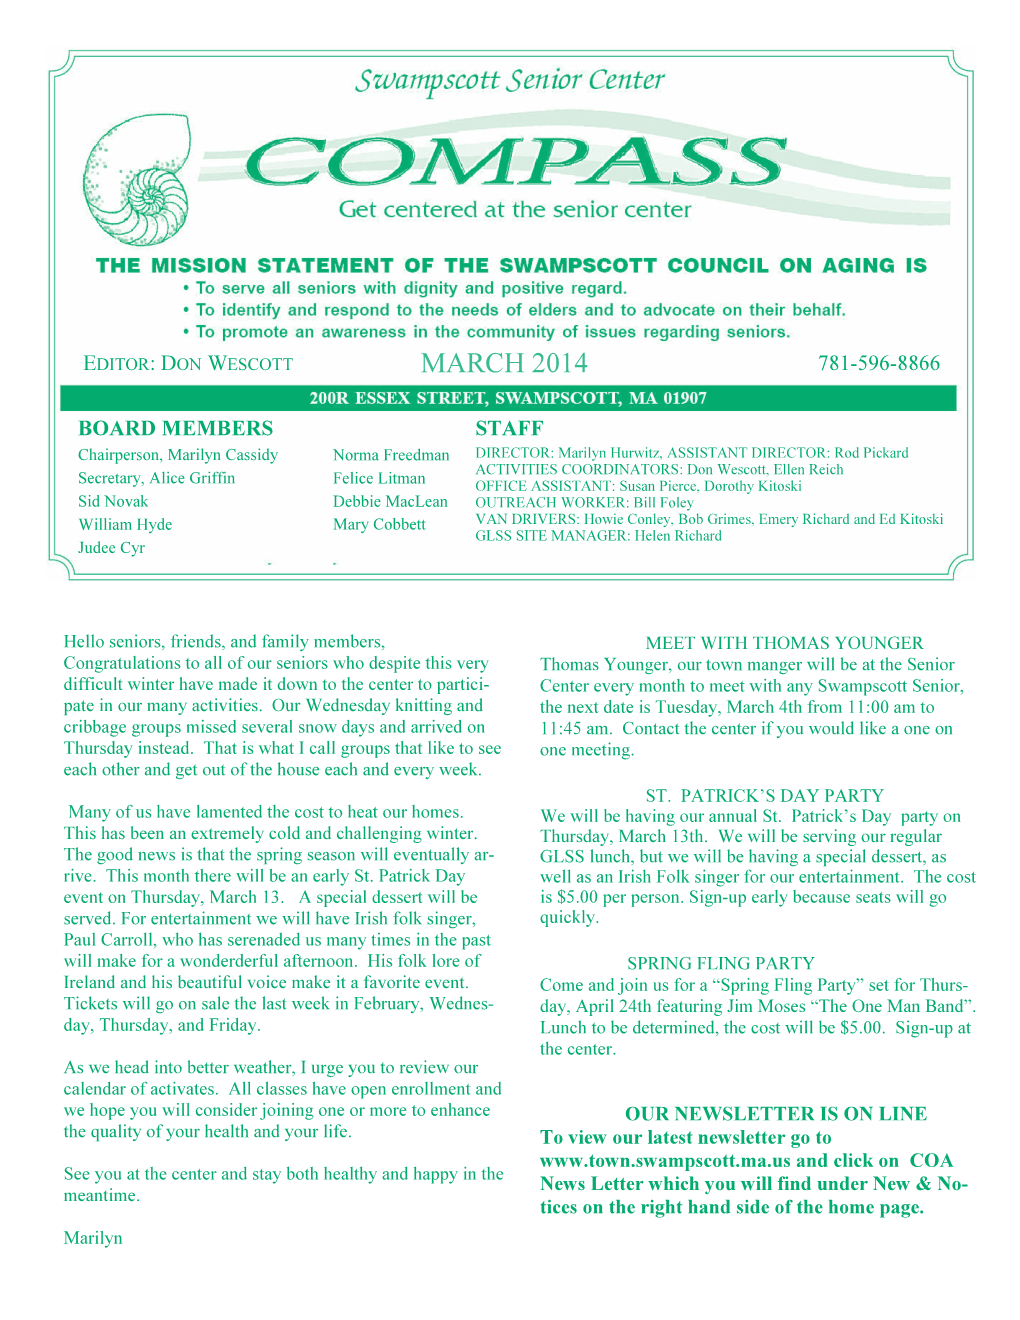 COA Compass March 2014 Newsletter